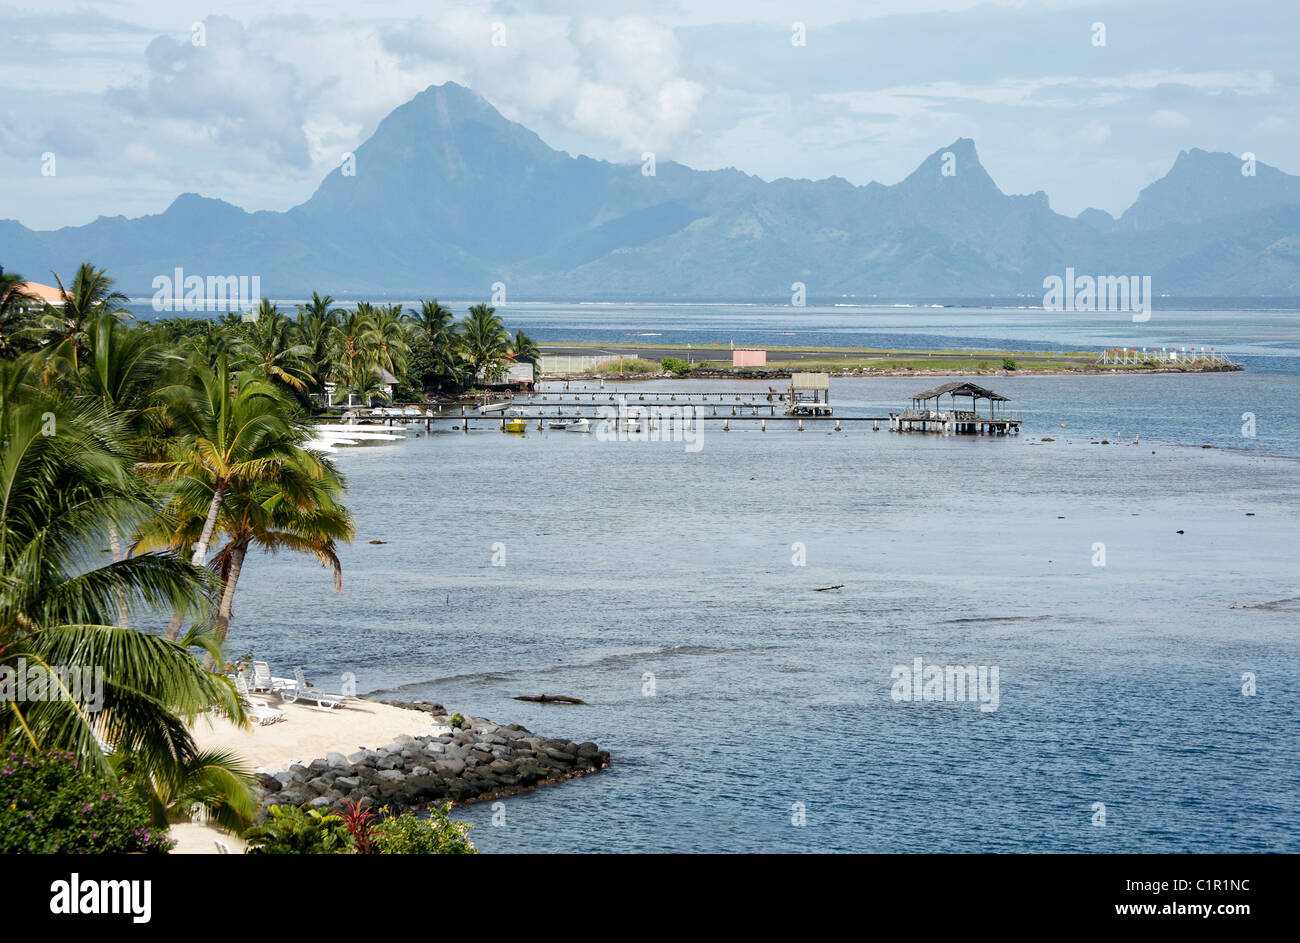 View of Exotic Coastline and Mountains in Tahiti, French Polynesia. Stock Photo